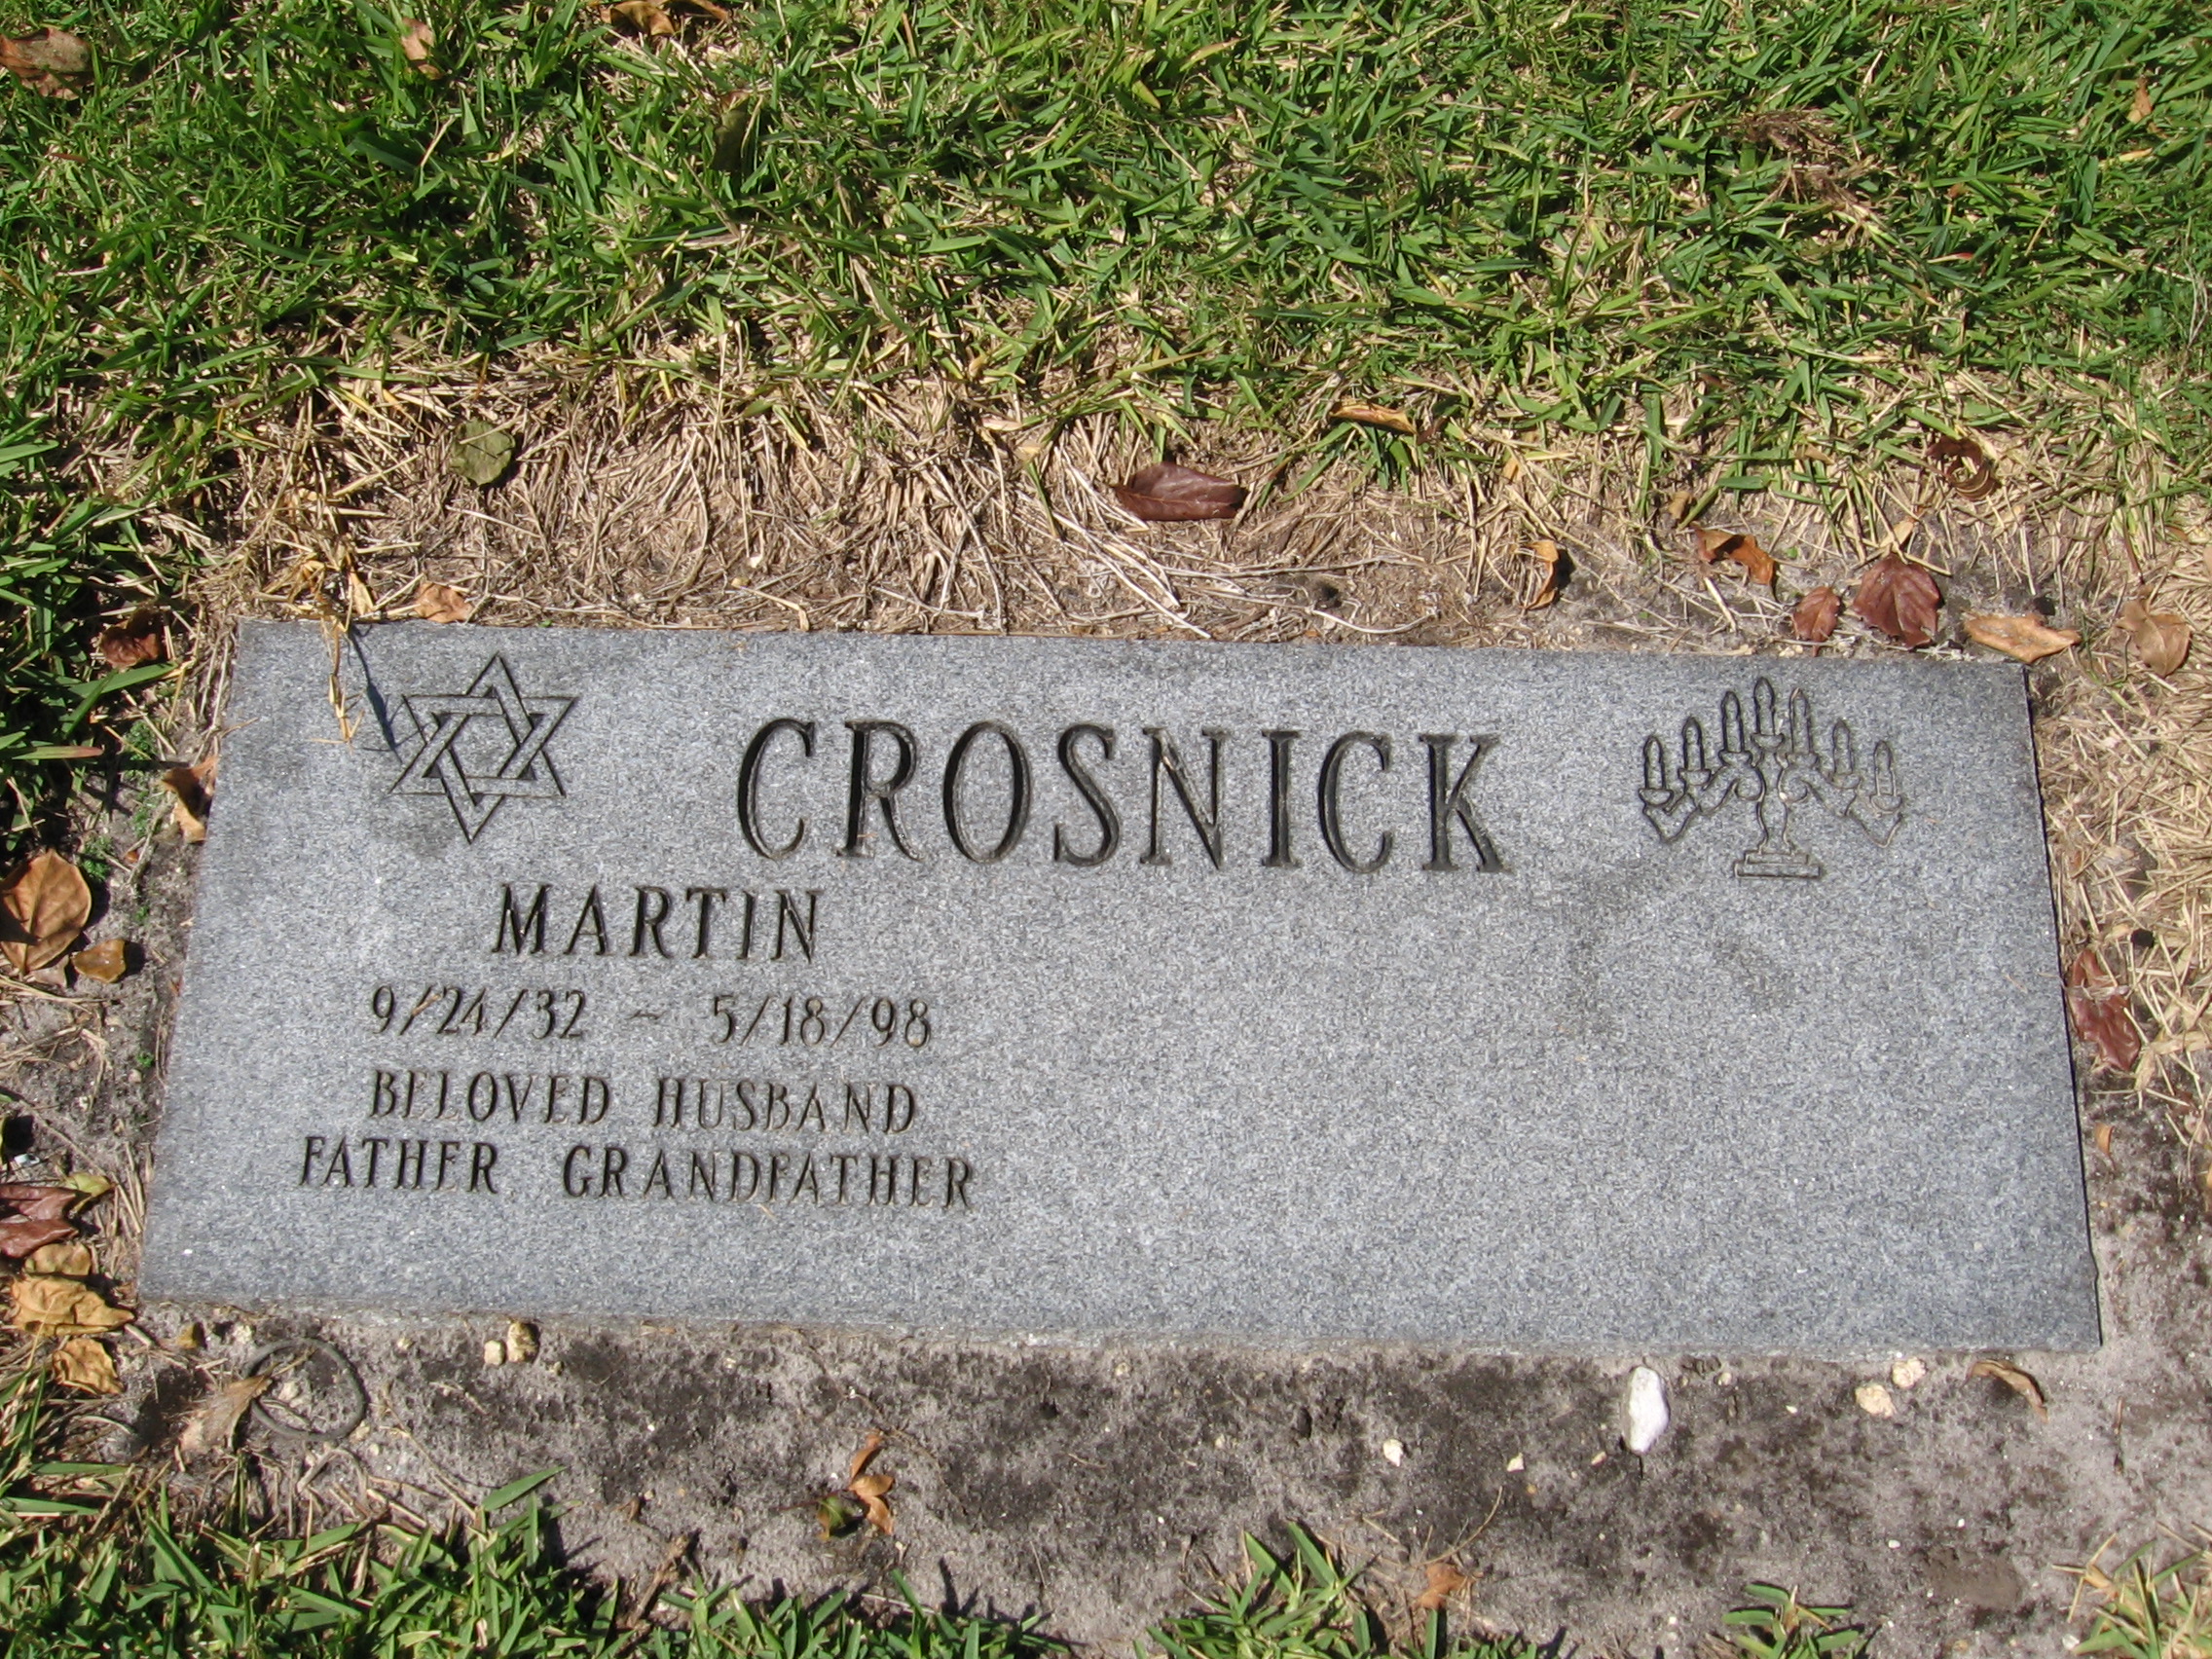 Martin Crosnick